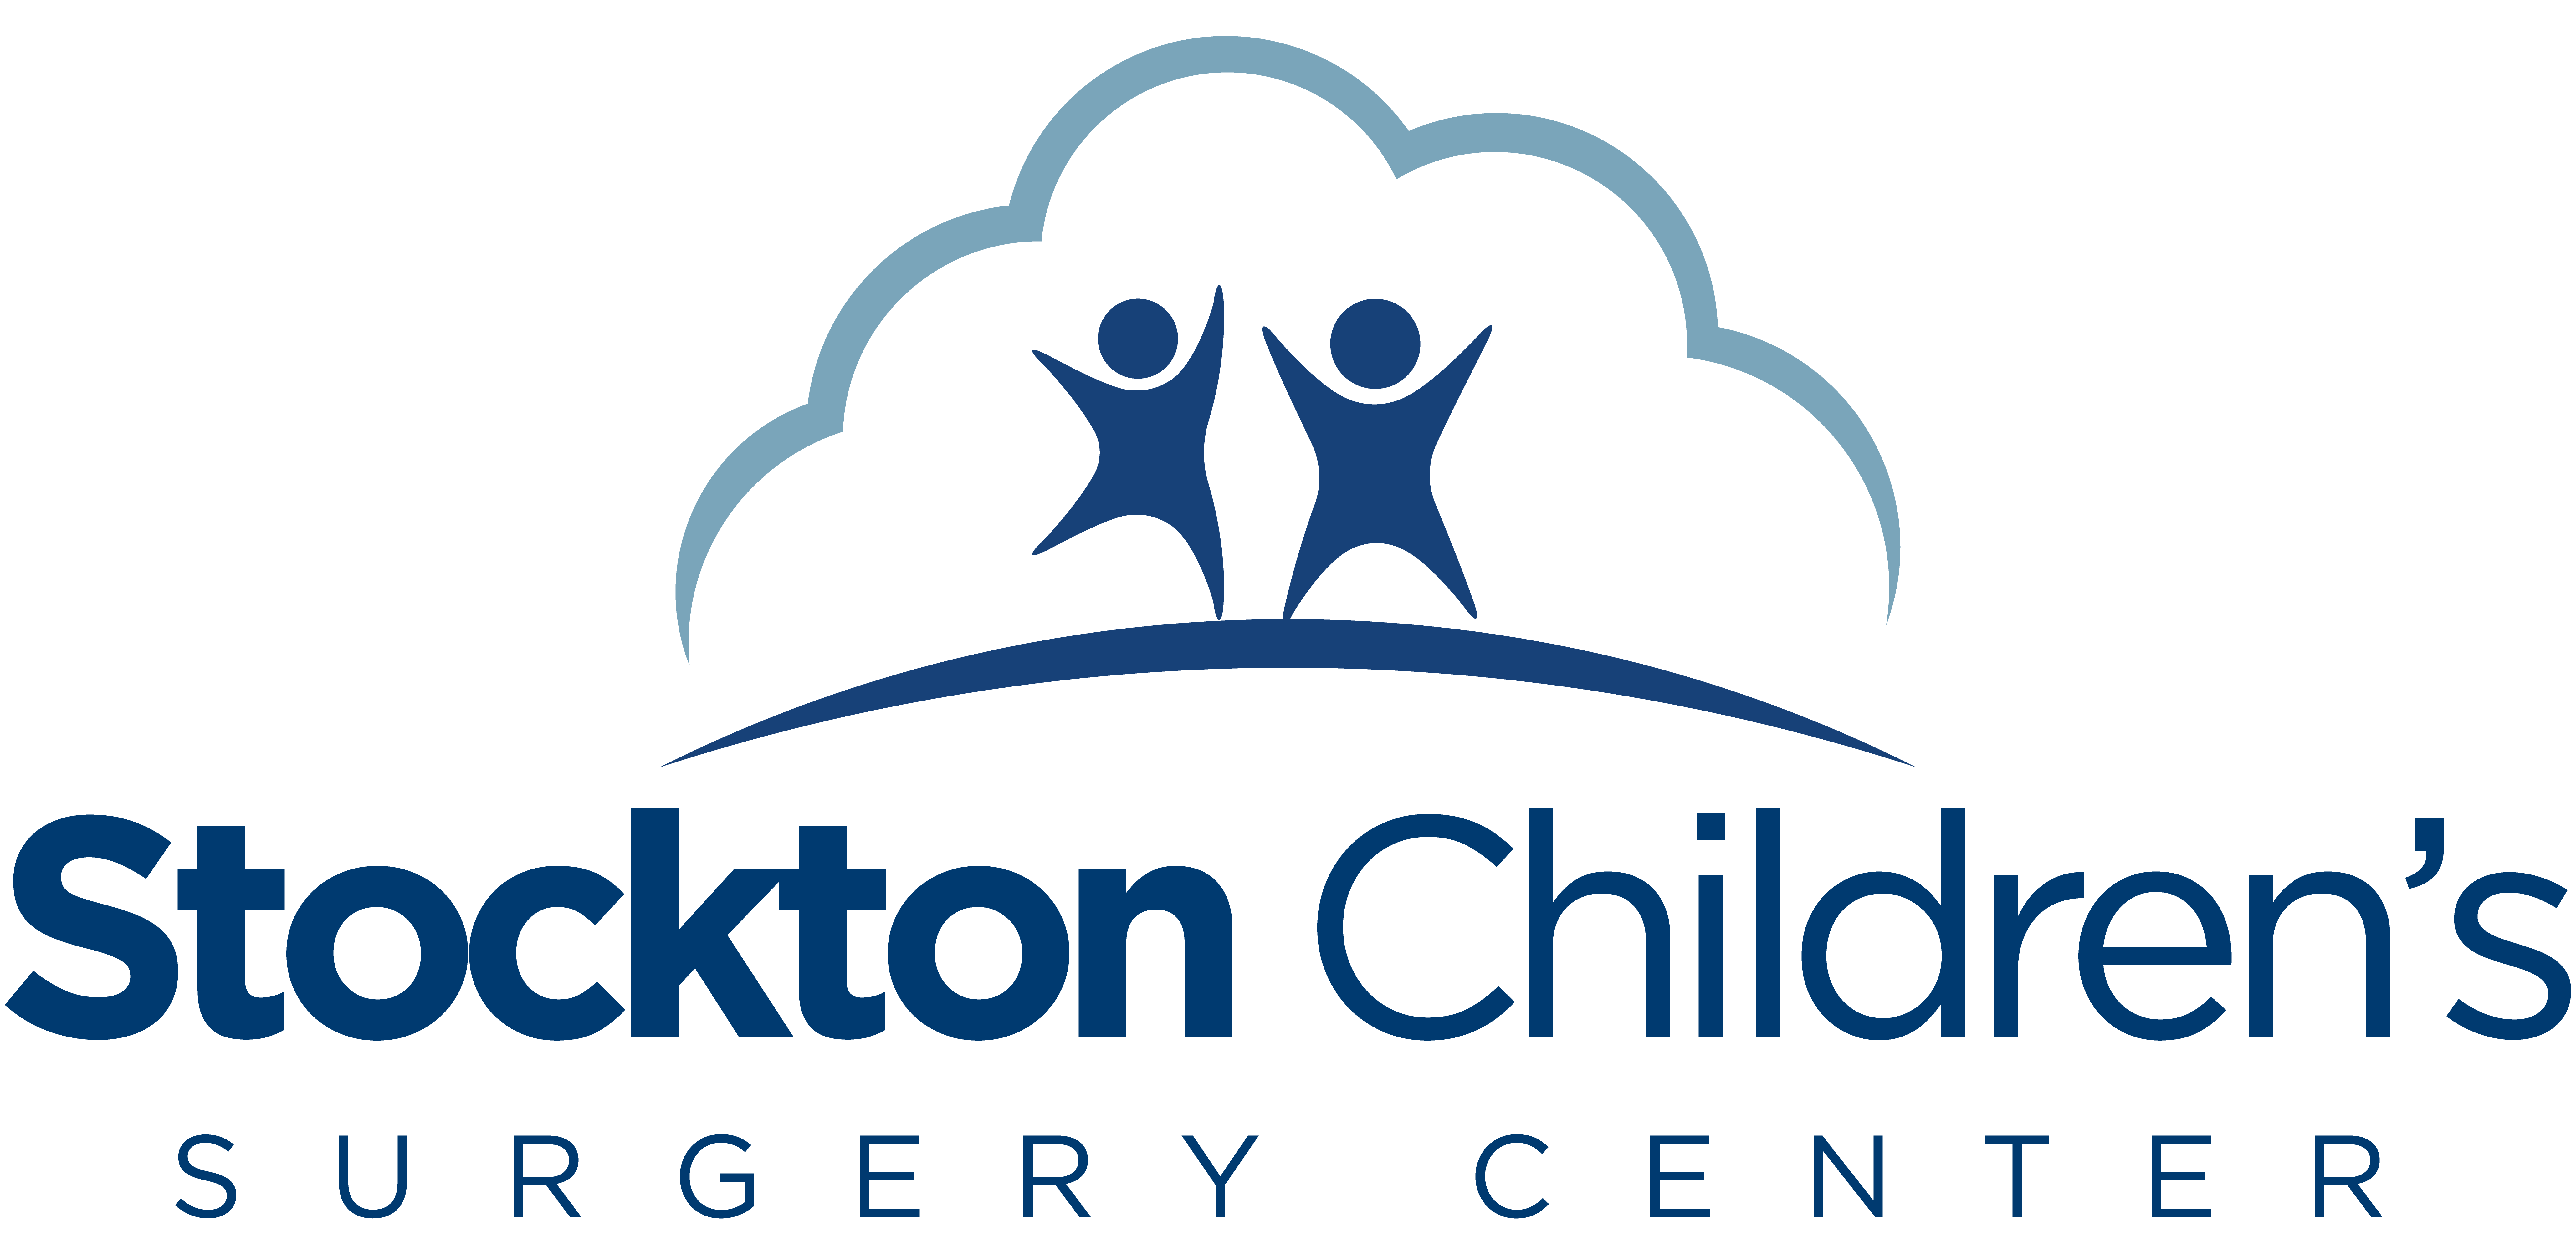 Stockton Children’s Surgery Center